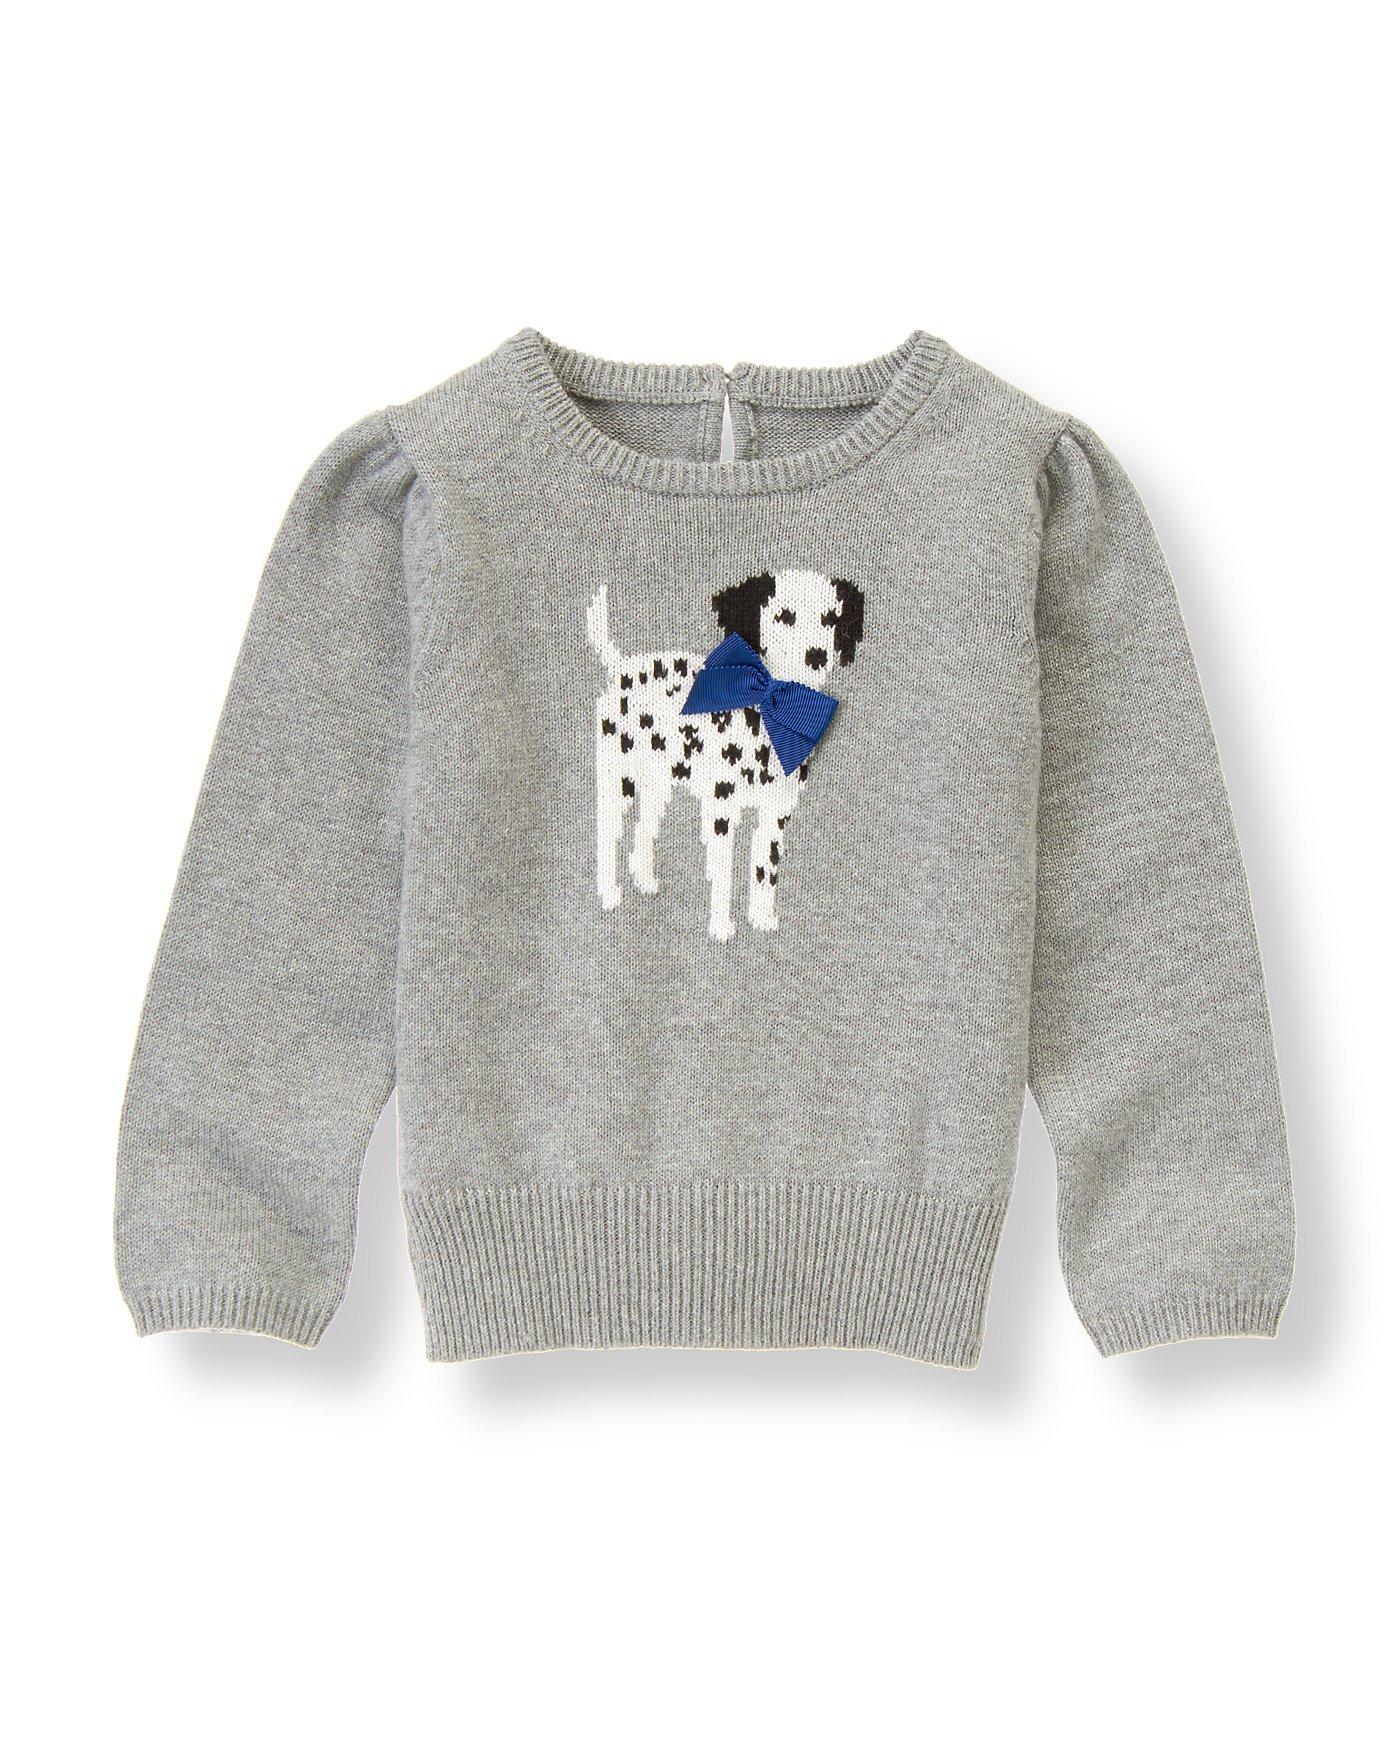 Dalmatian Sweater image number 0